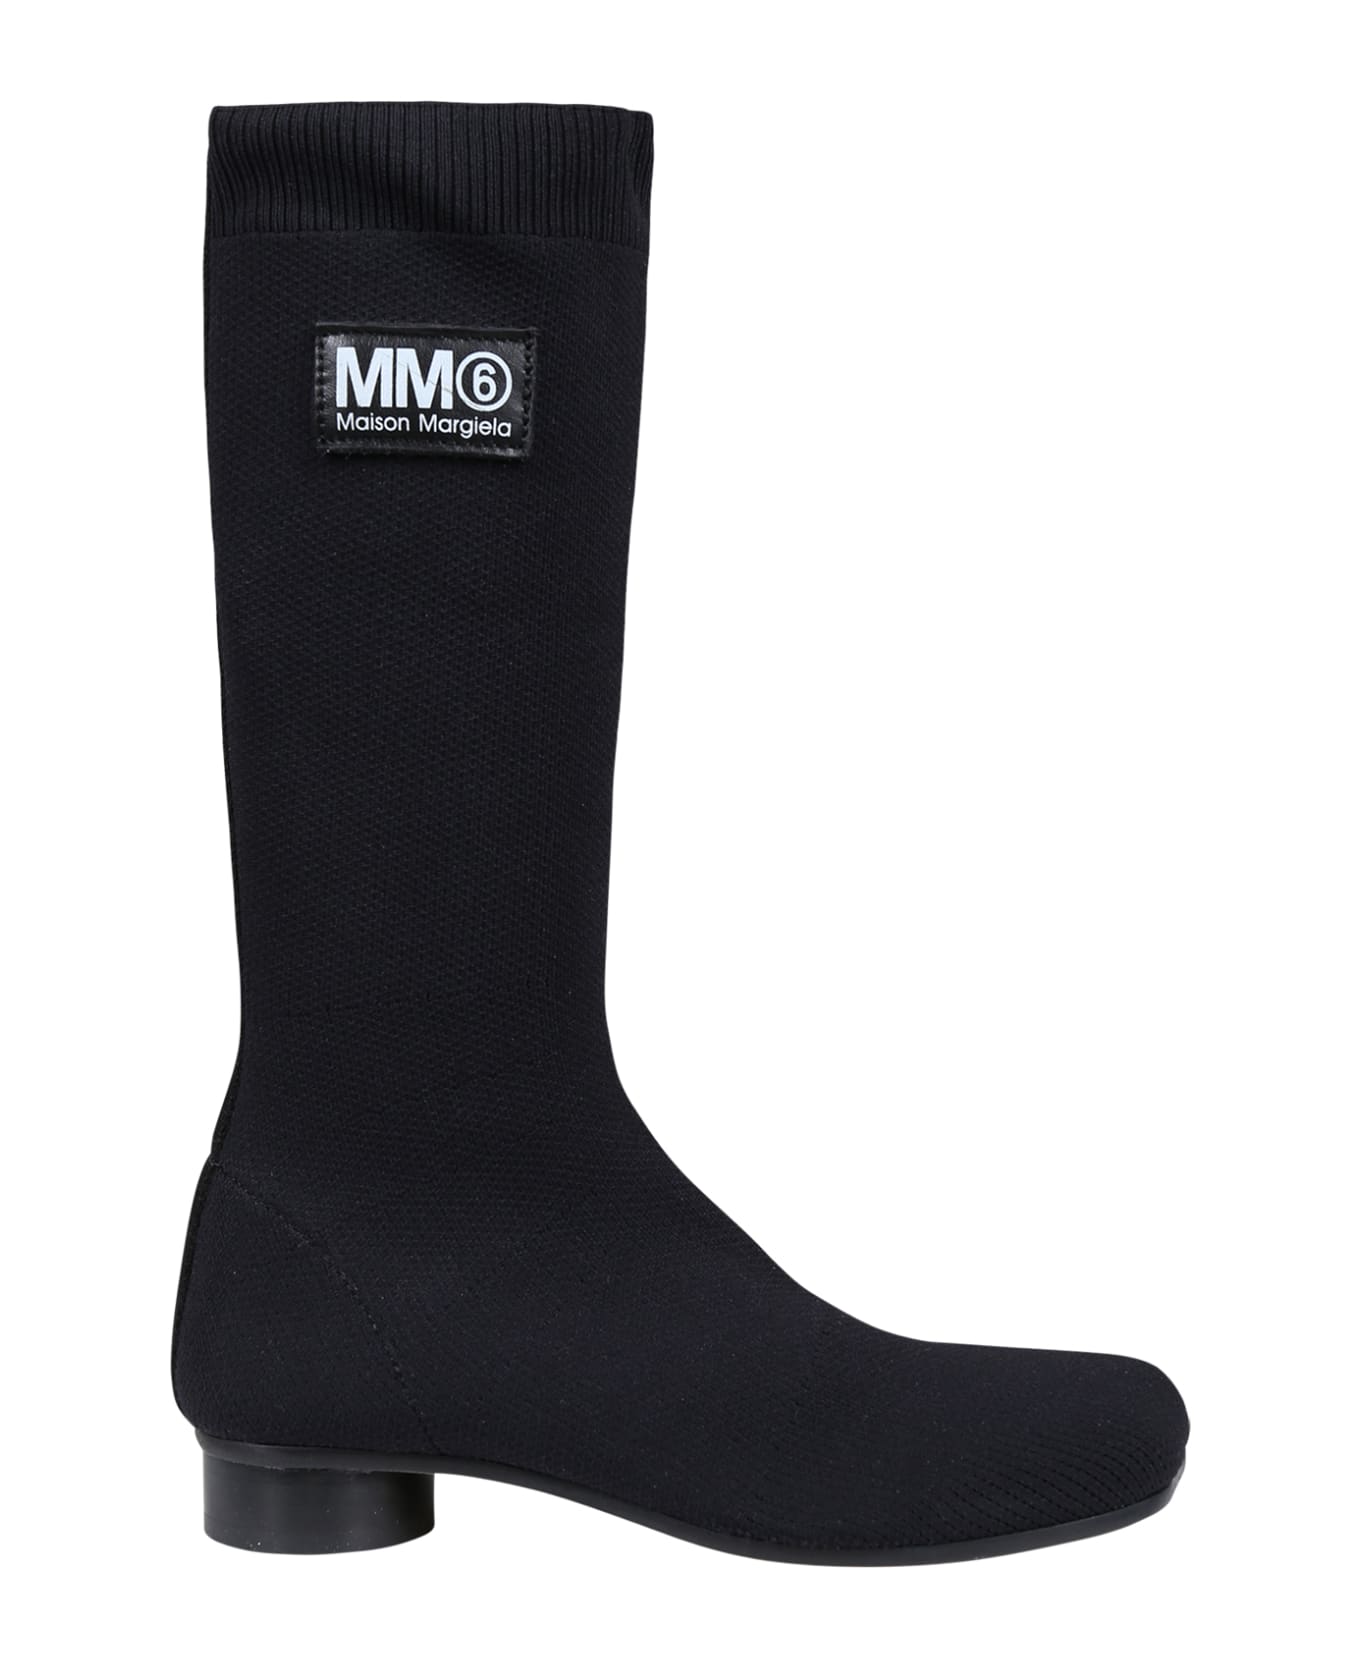 MM6 Maison Margiela Black Boots For Girl With Logo - Black シューズ